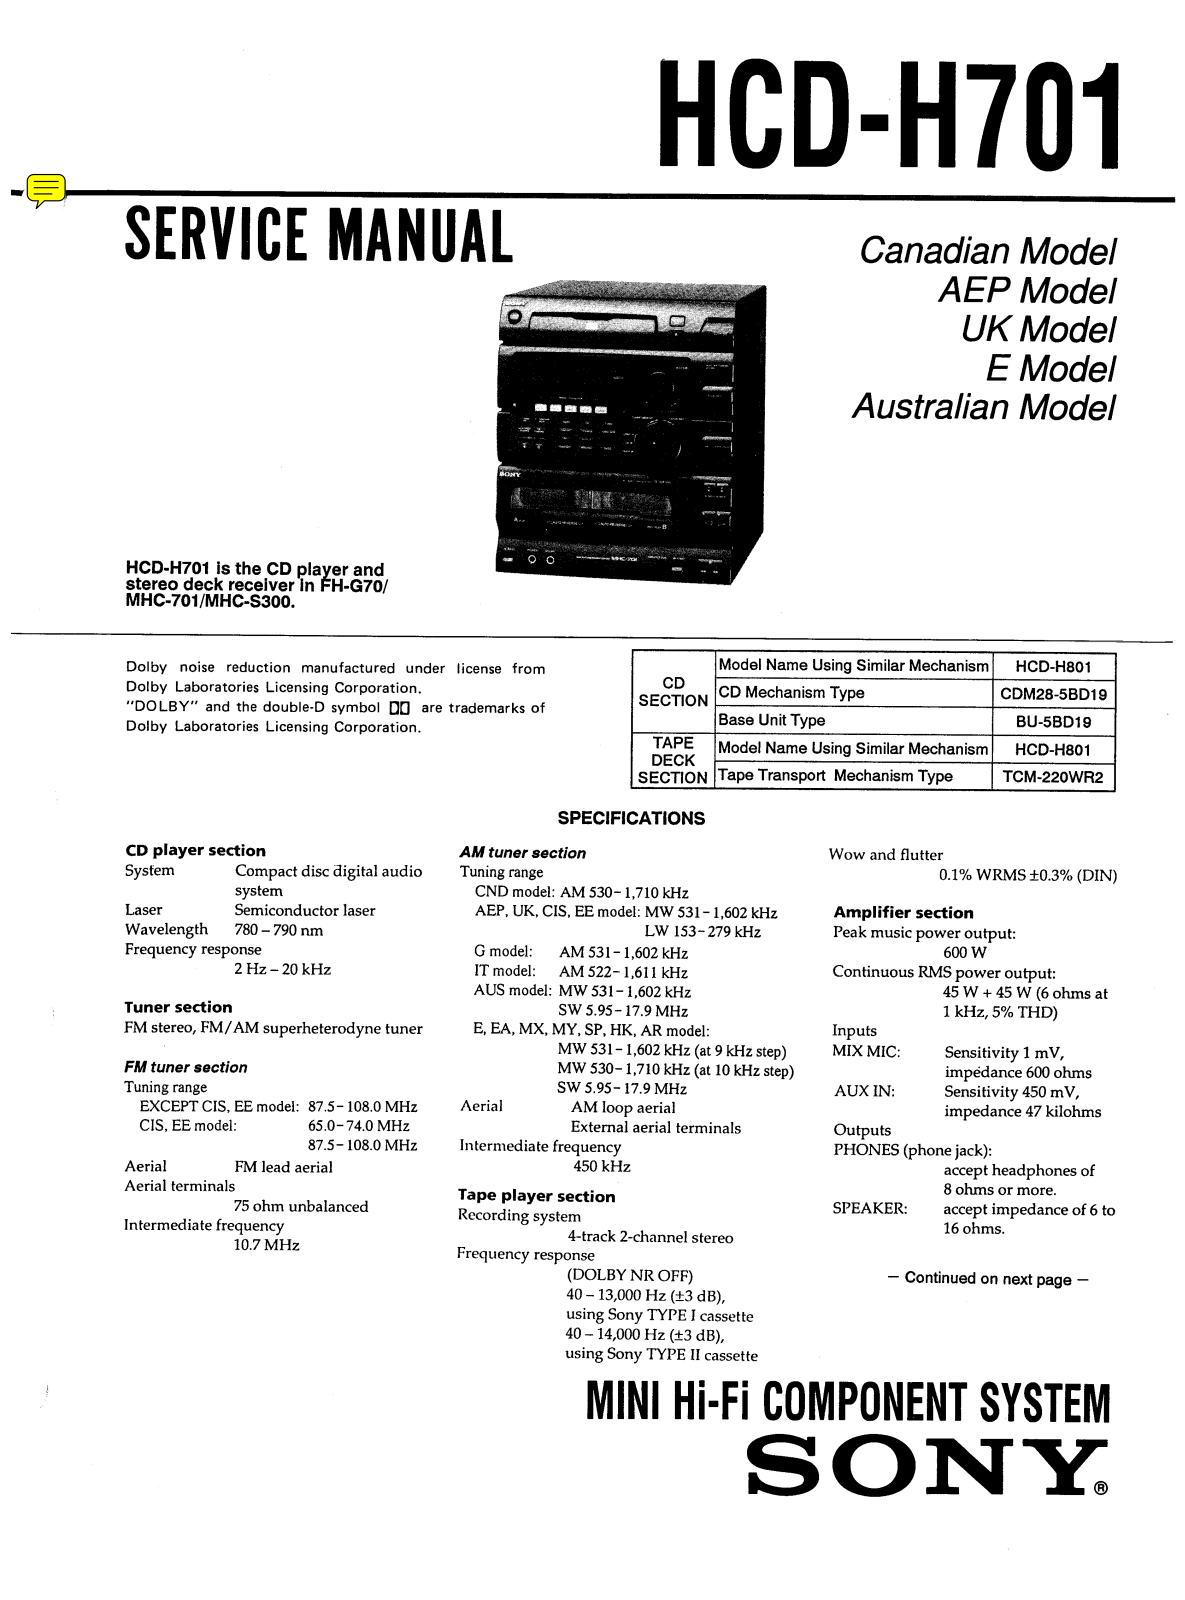 Sony HCD H701 Service Manual